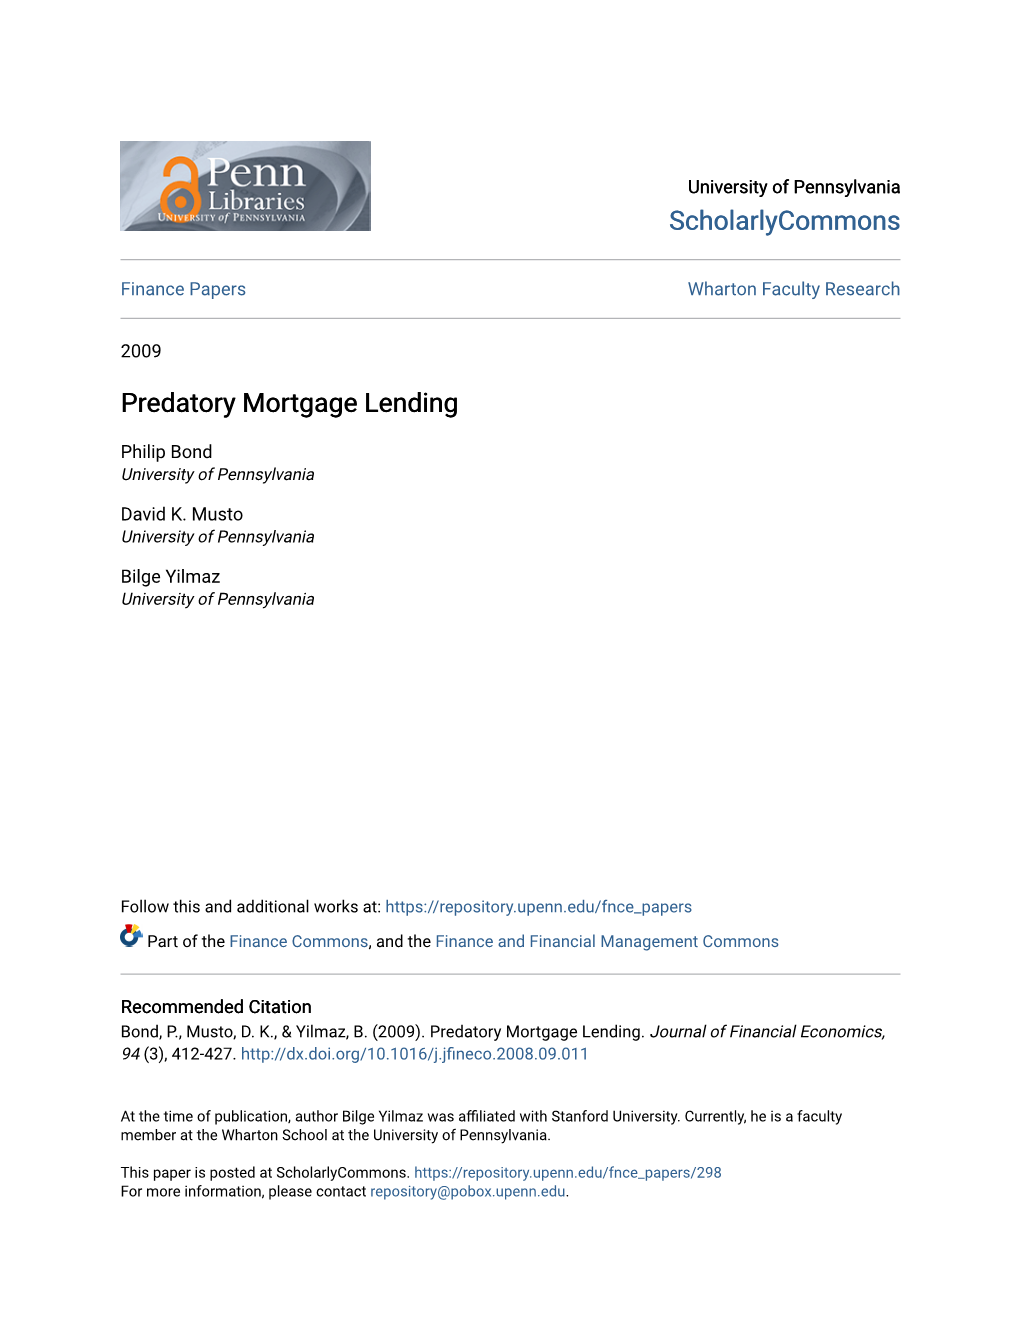 Predatory Mortgage Lending